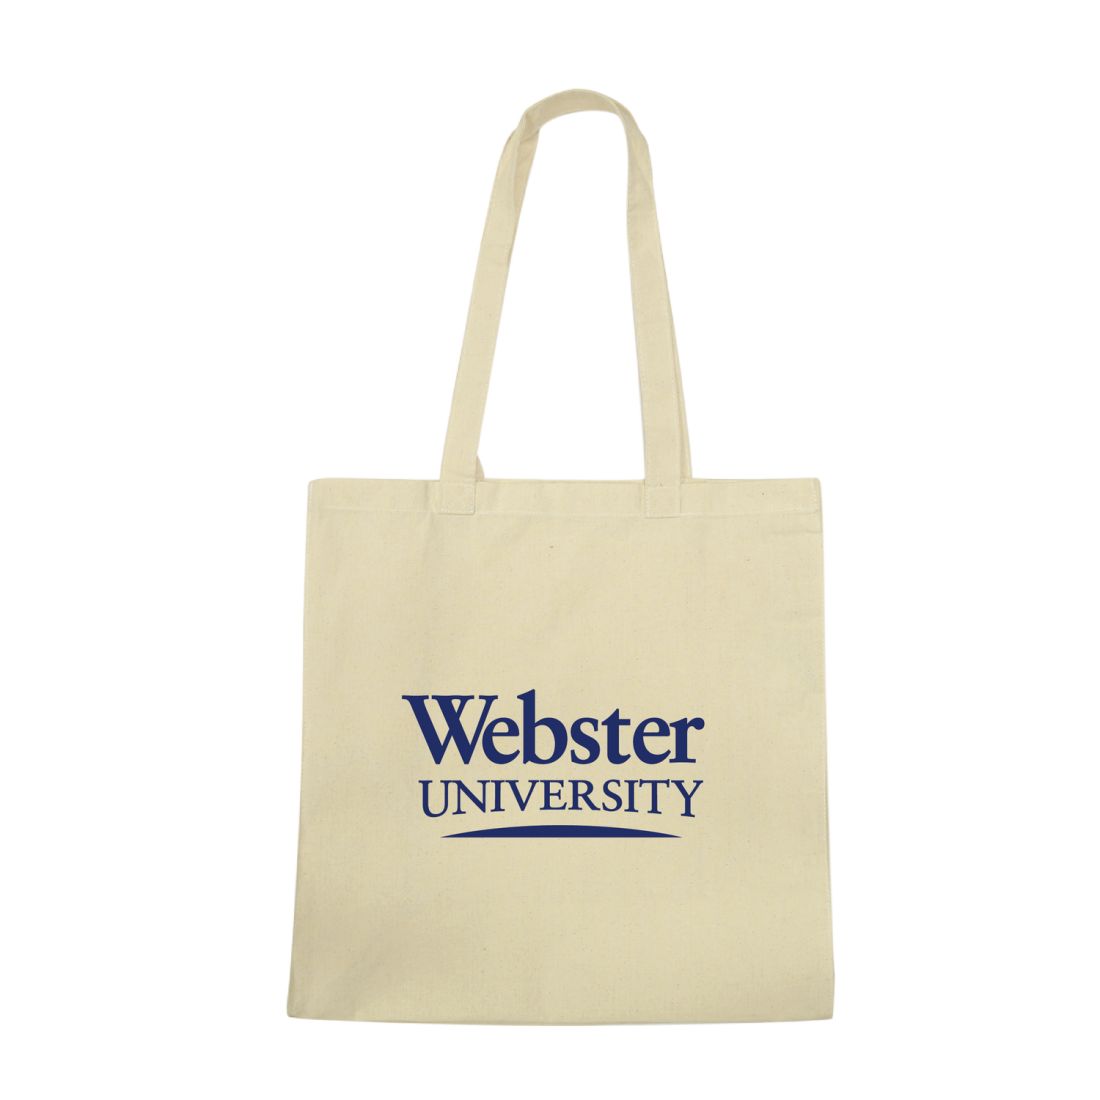 Webster University Gorlocks Institutional Tote Bag